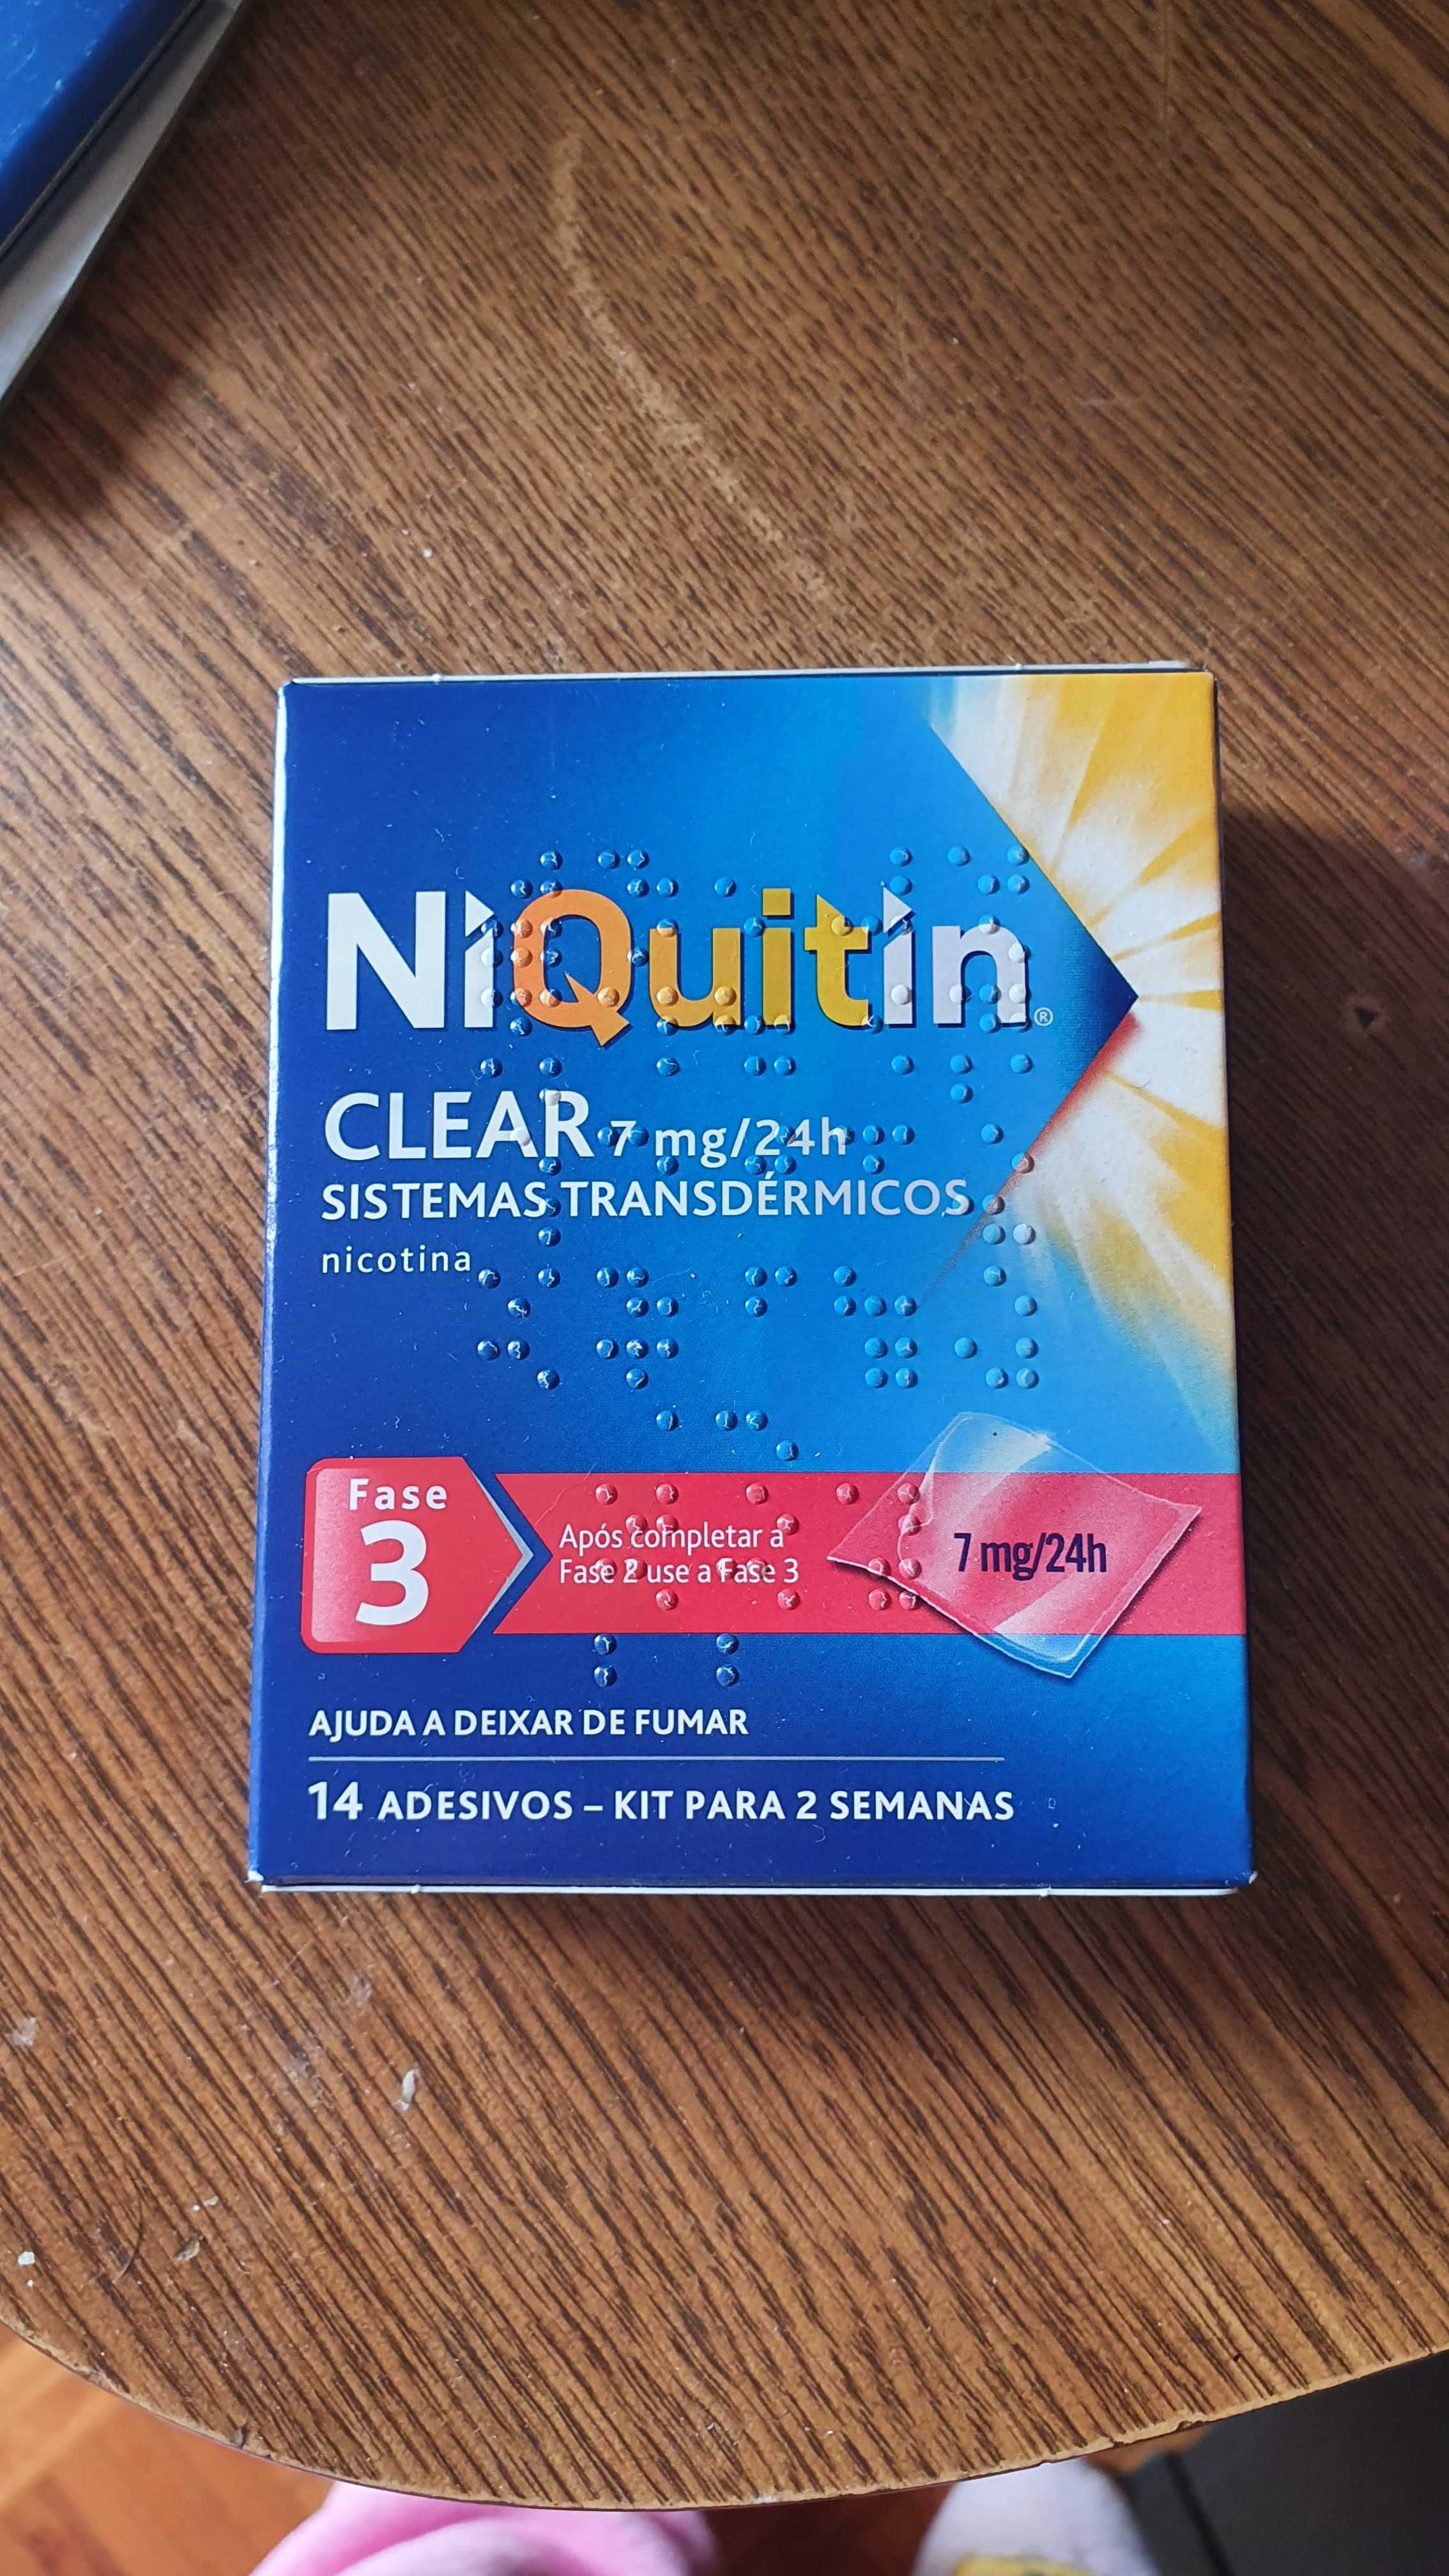 NiQuitim Clear 7 mg/ 24h